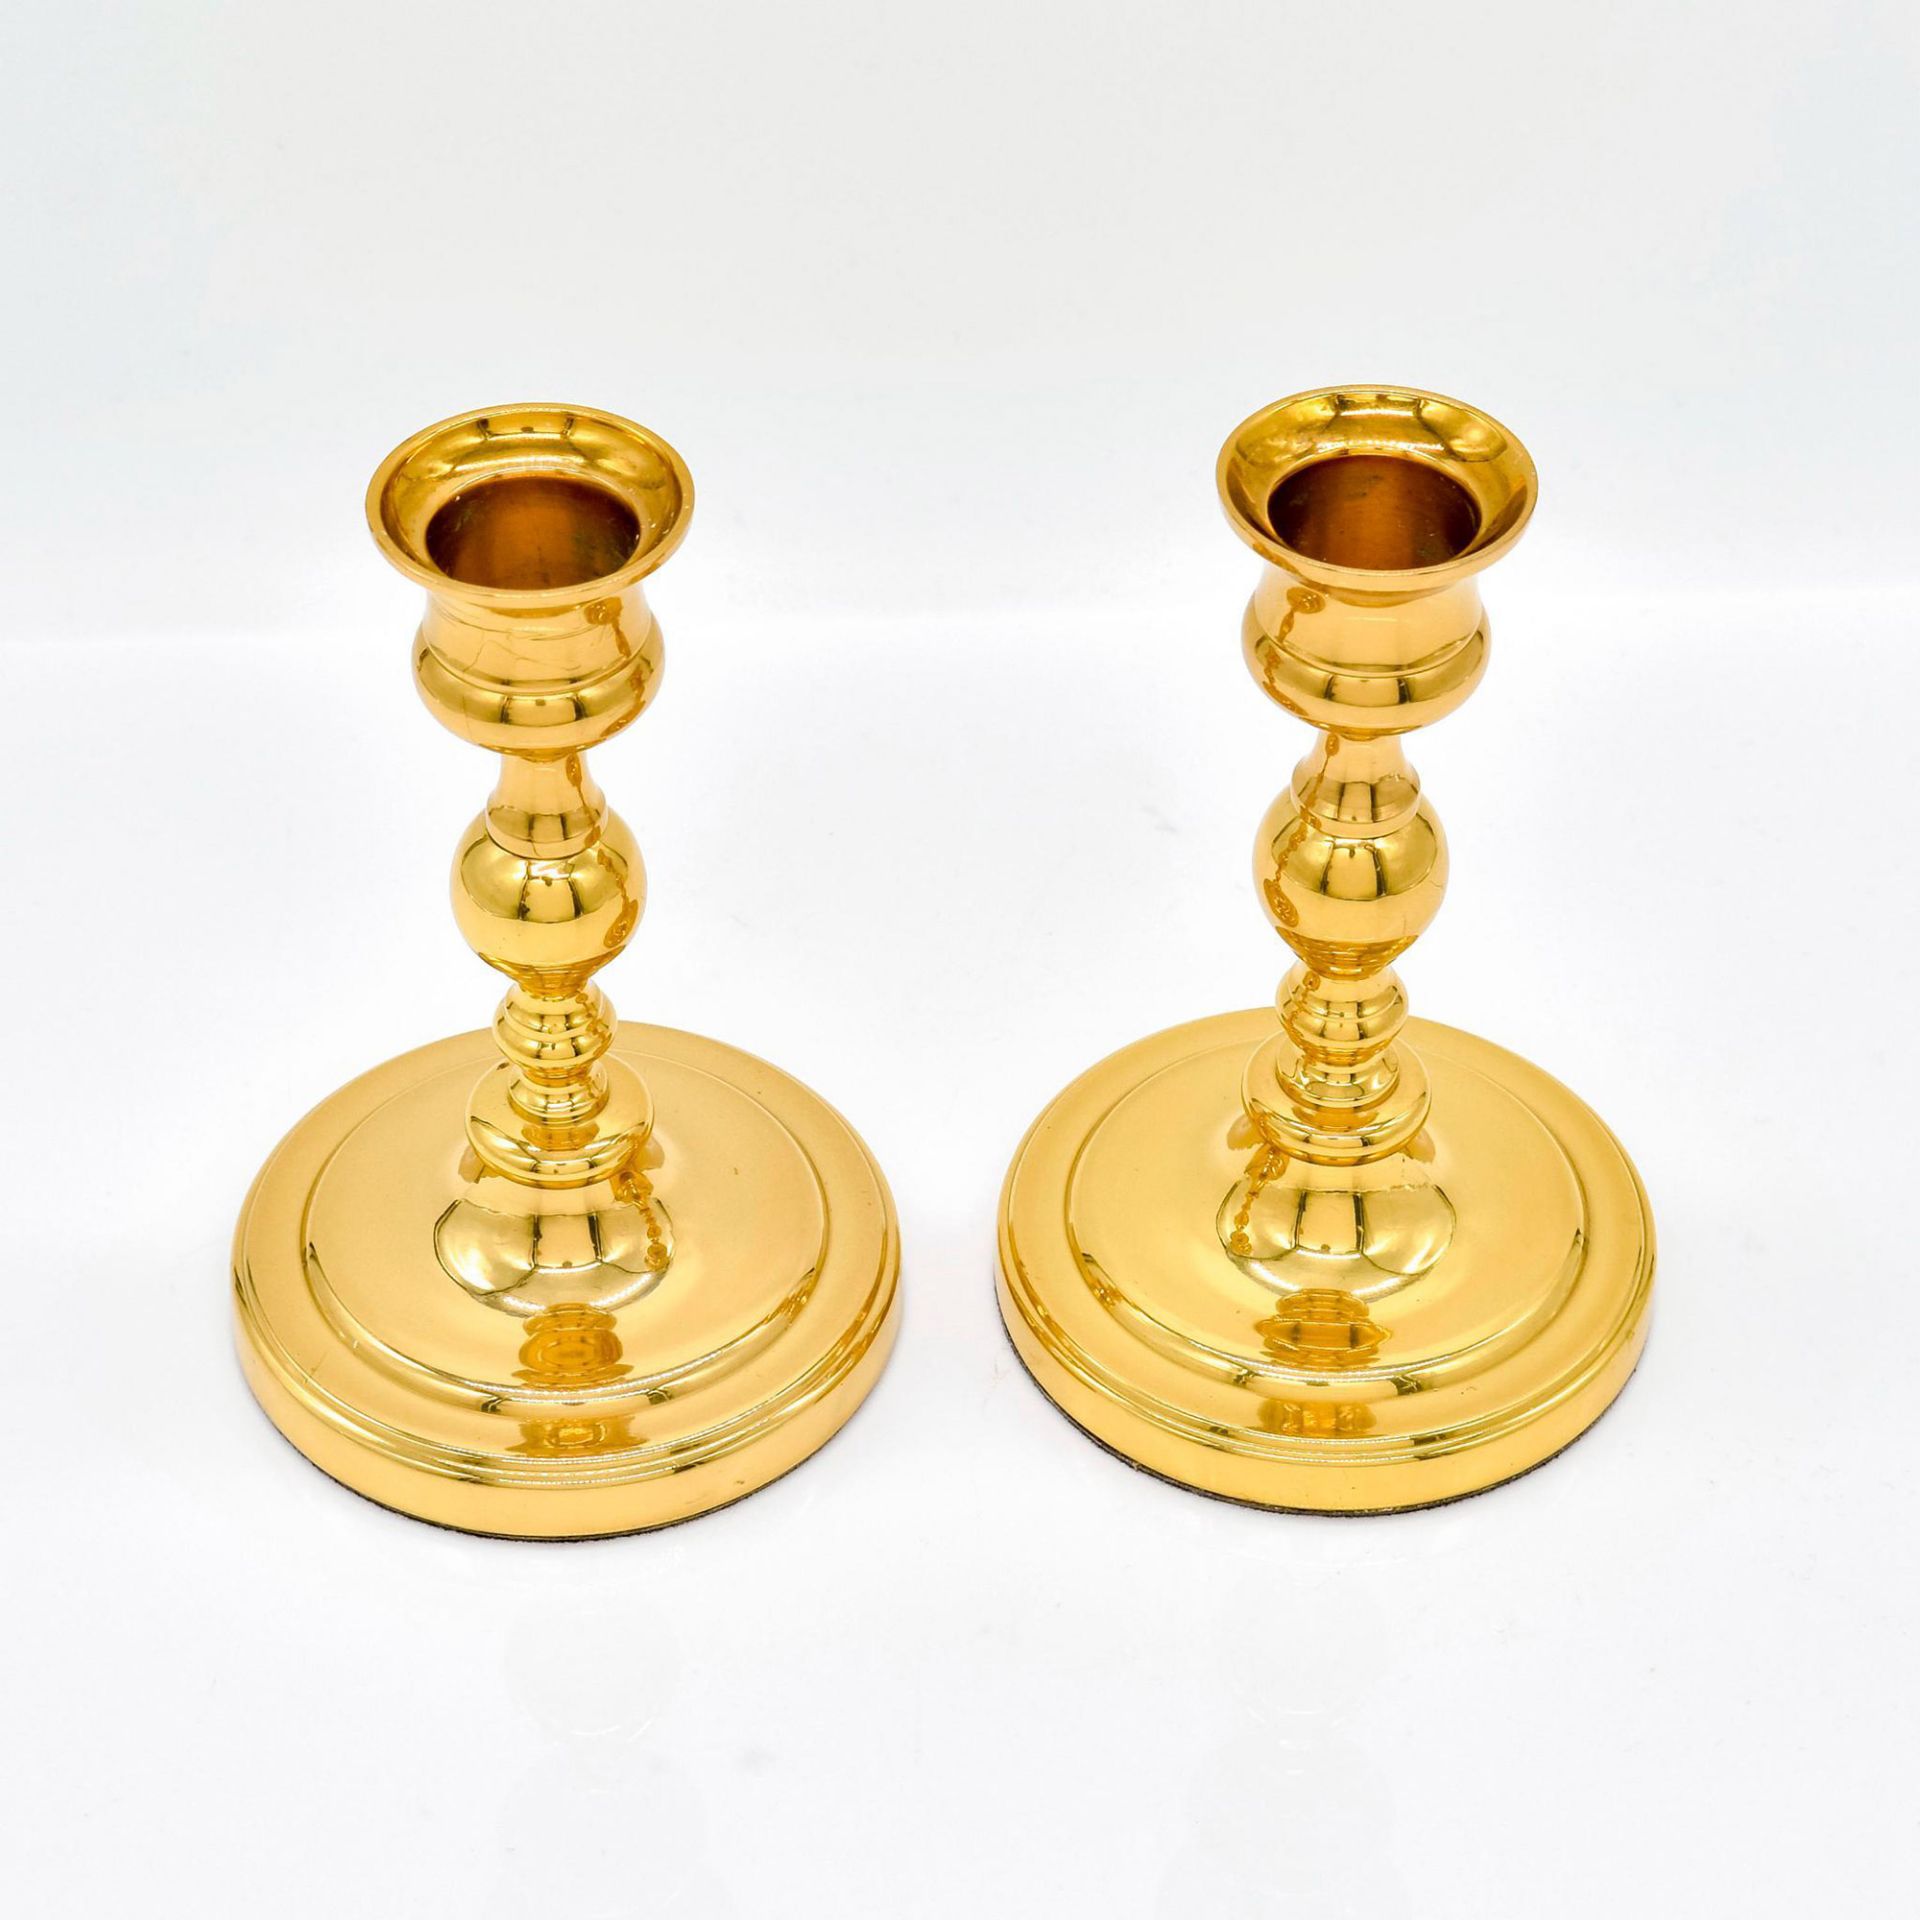 Pair of Carolina Brass Candlestick Holders - Image 2 of 5